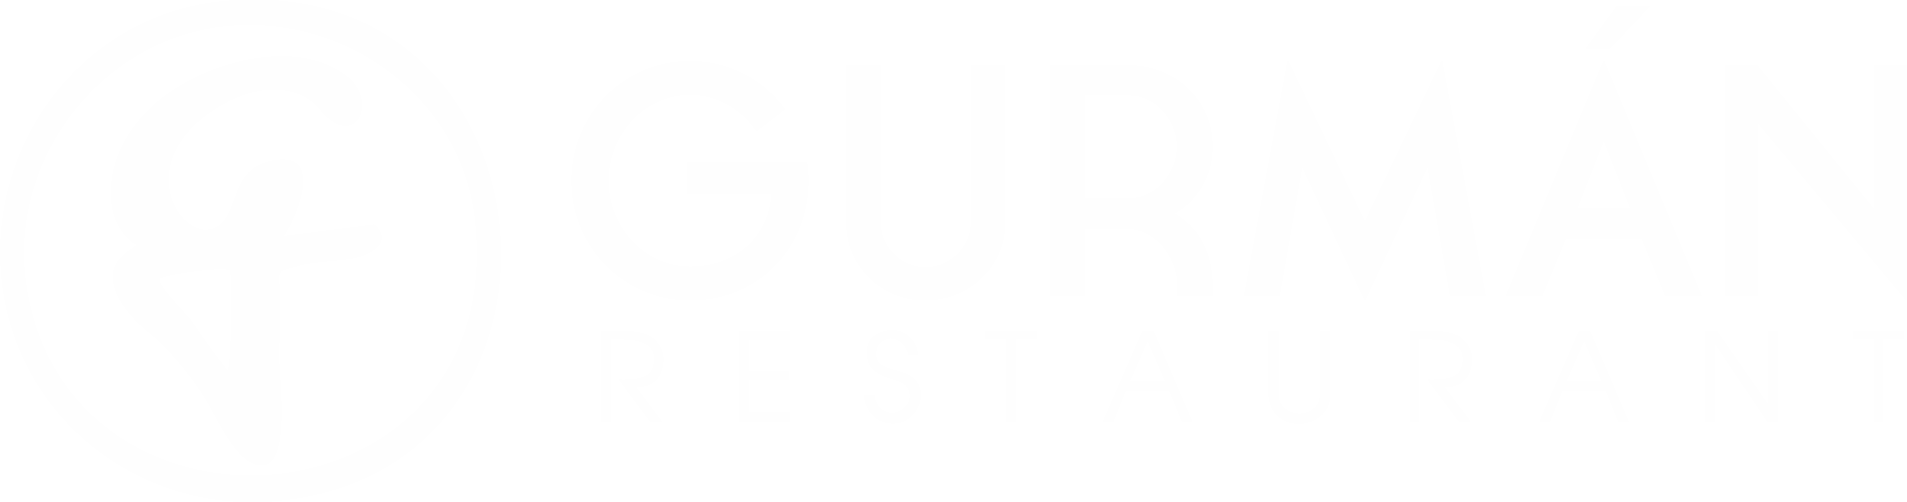 Reštaurácia Gurmán BB